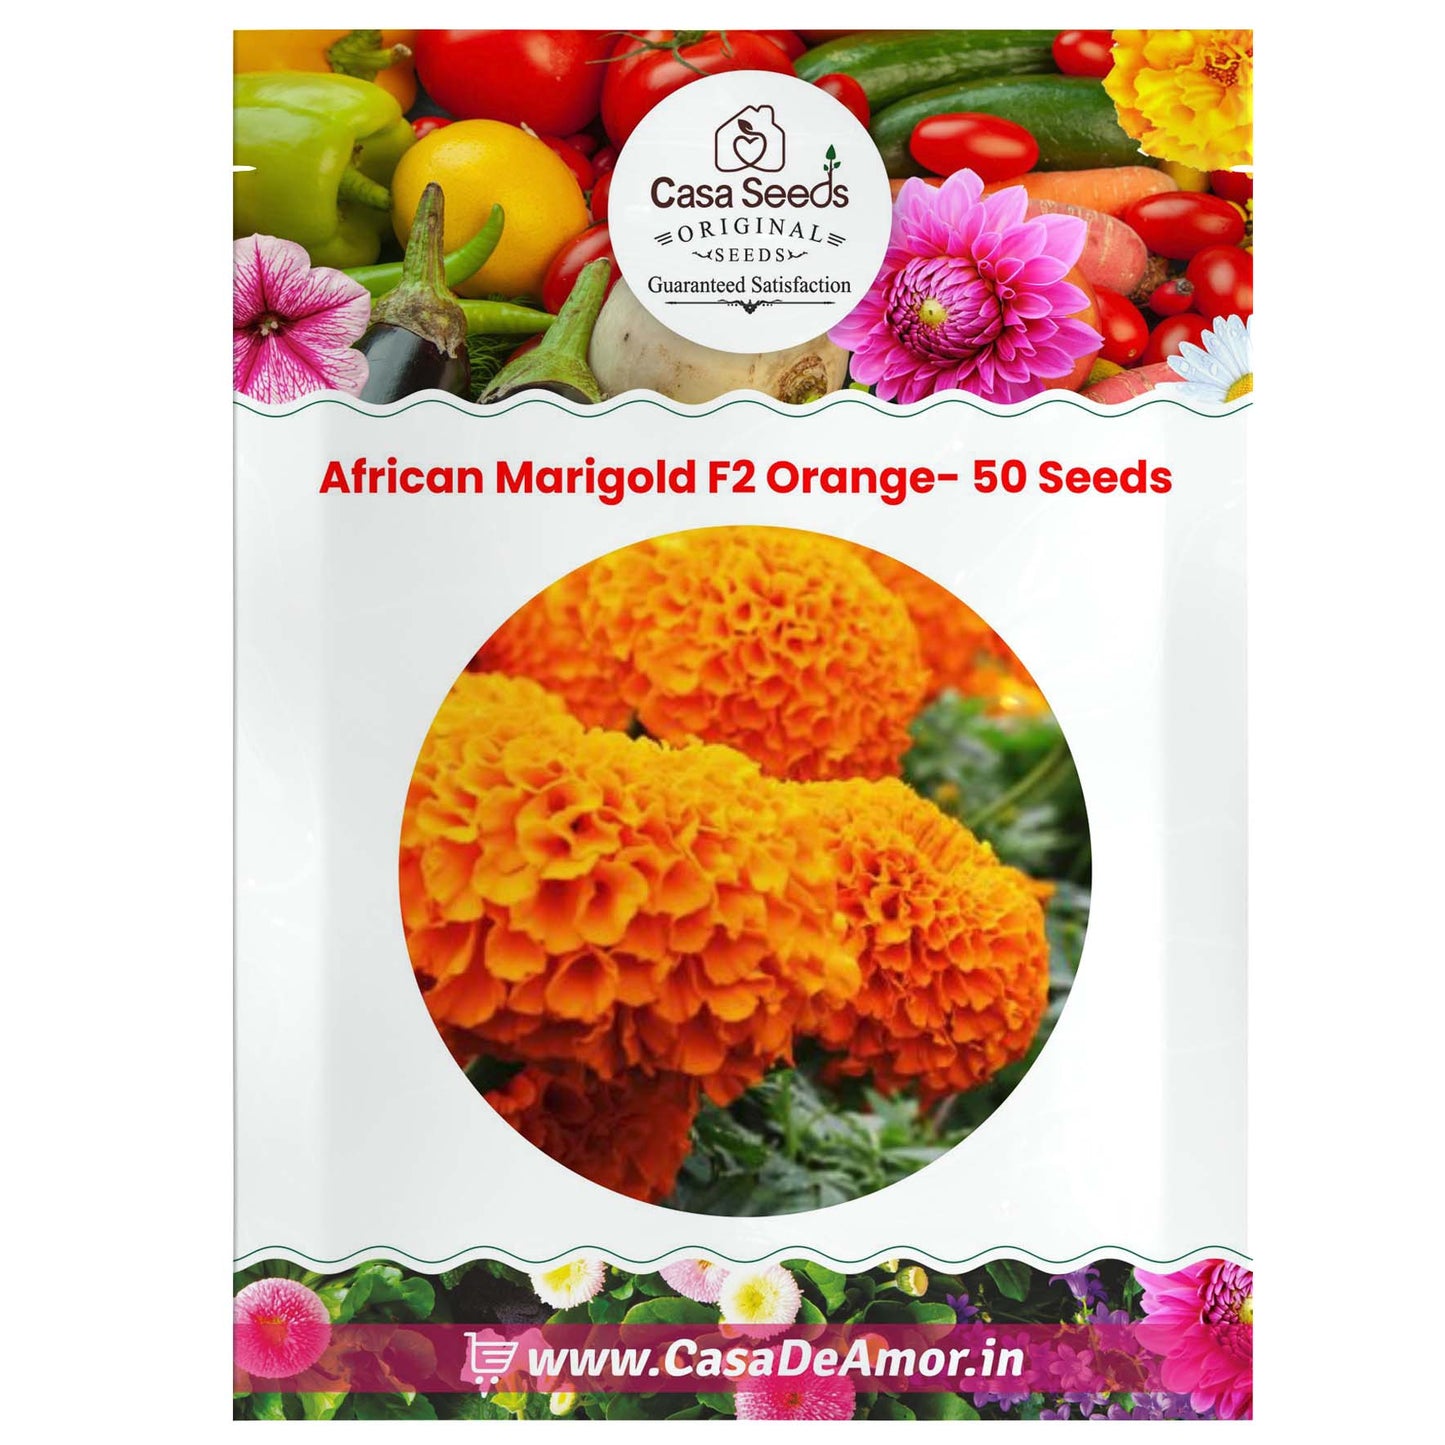 African Marigold F2 Orange- 50 Seeds